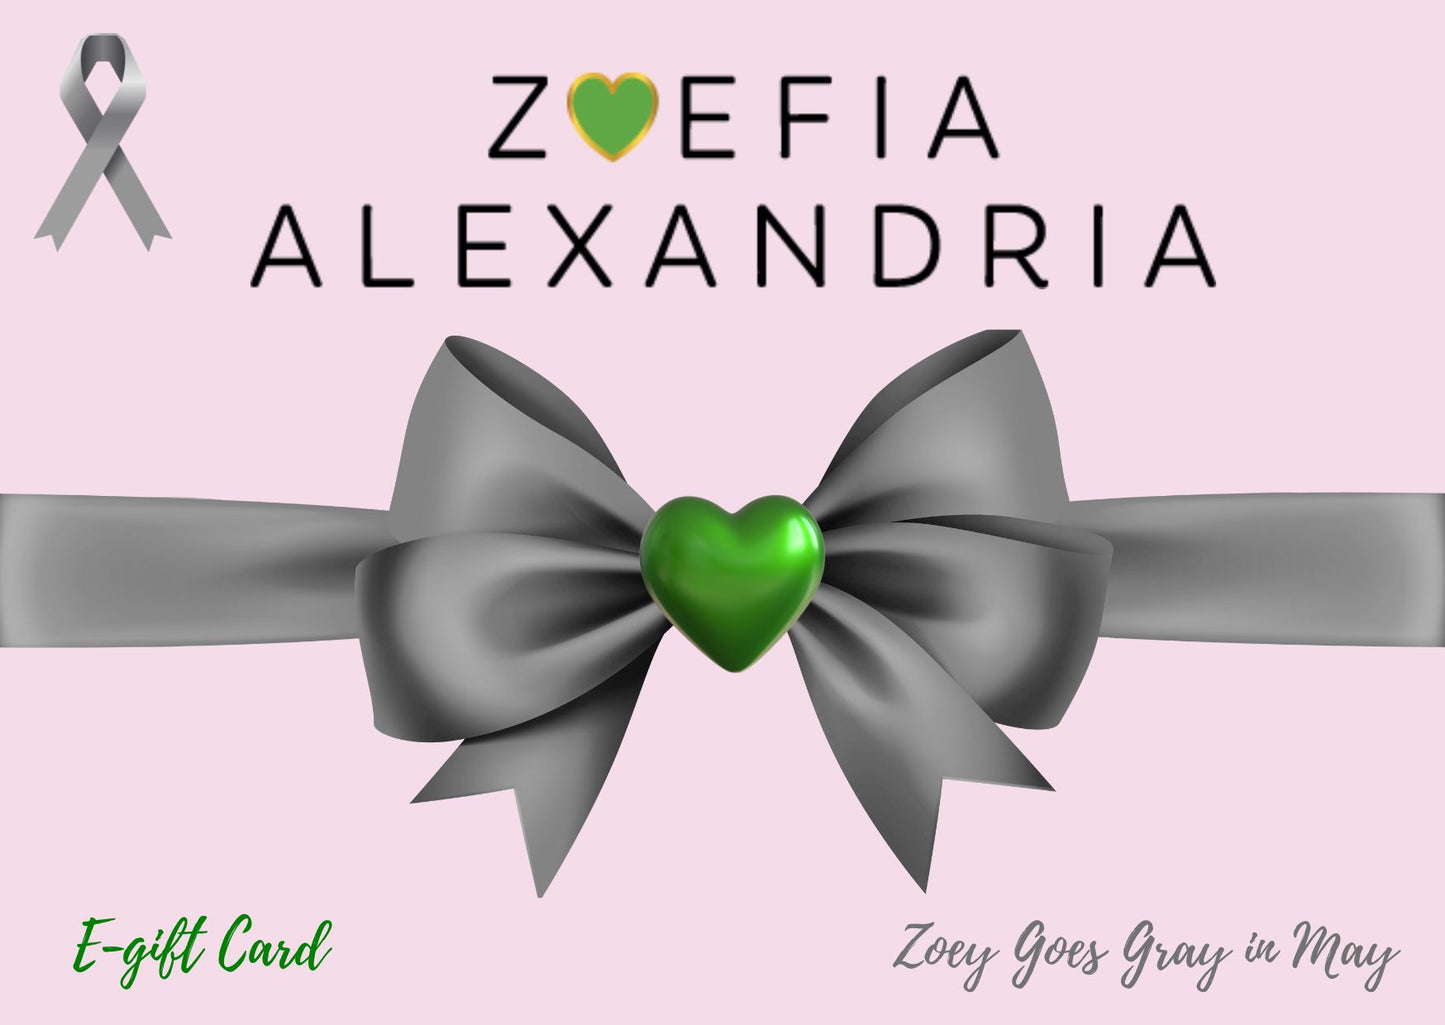 Zoefia Alexandria E-Gift Card